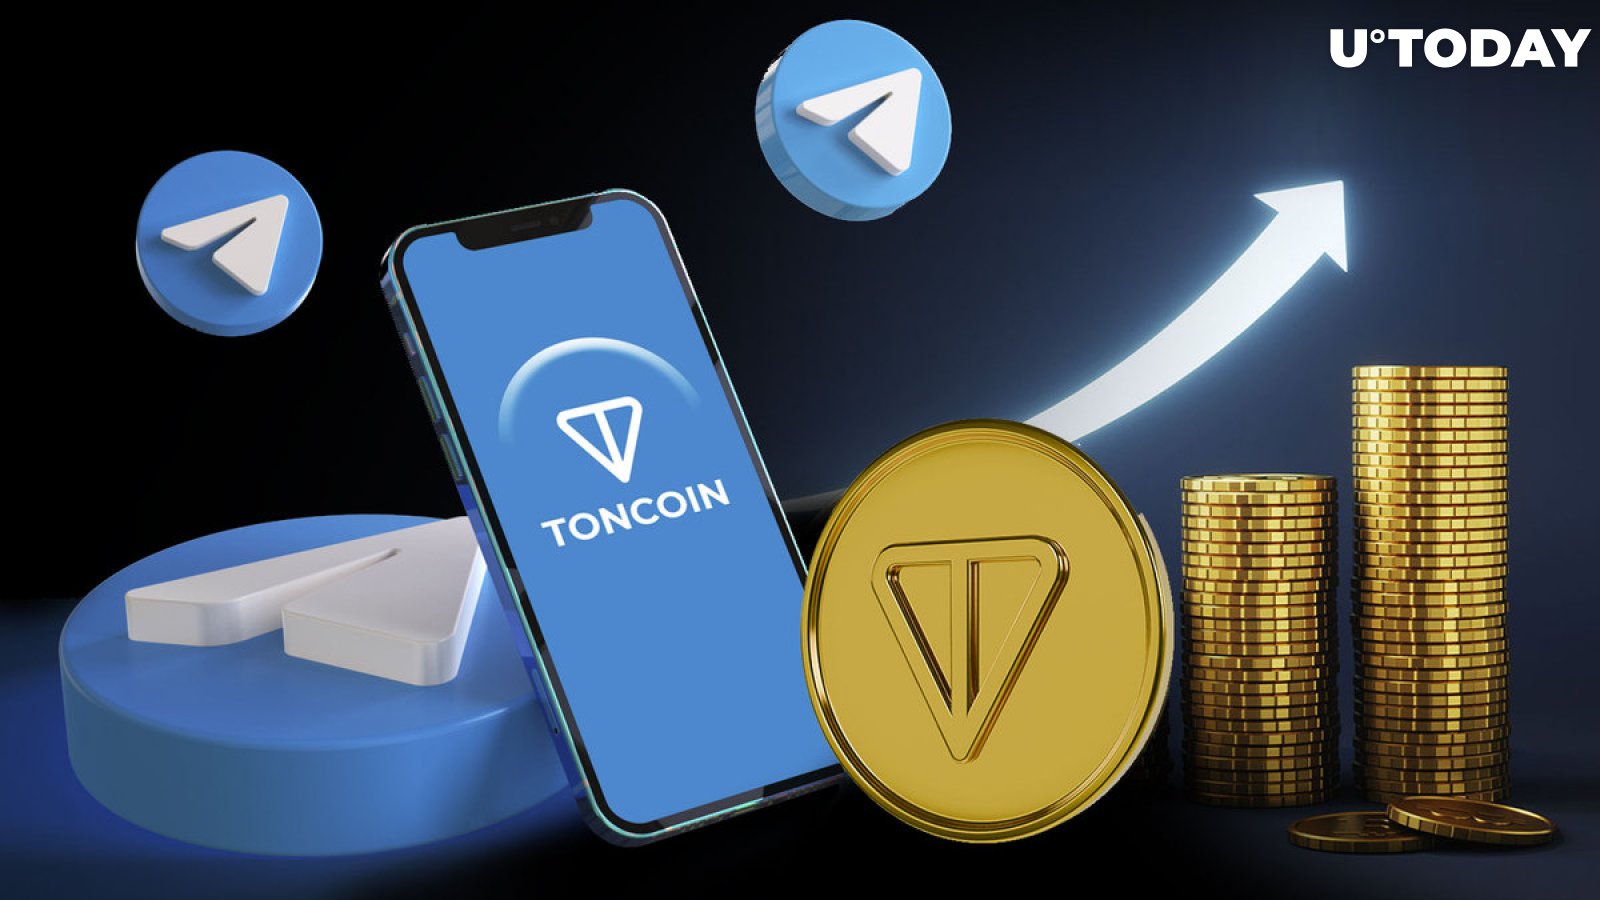 Toncoin (TON) Soars 35% as Pavel Durov Unleashes Epic Telegram Monetization